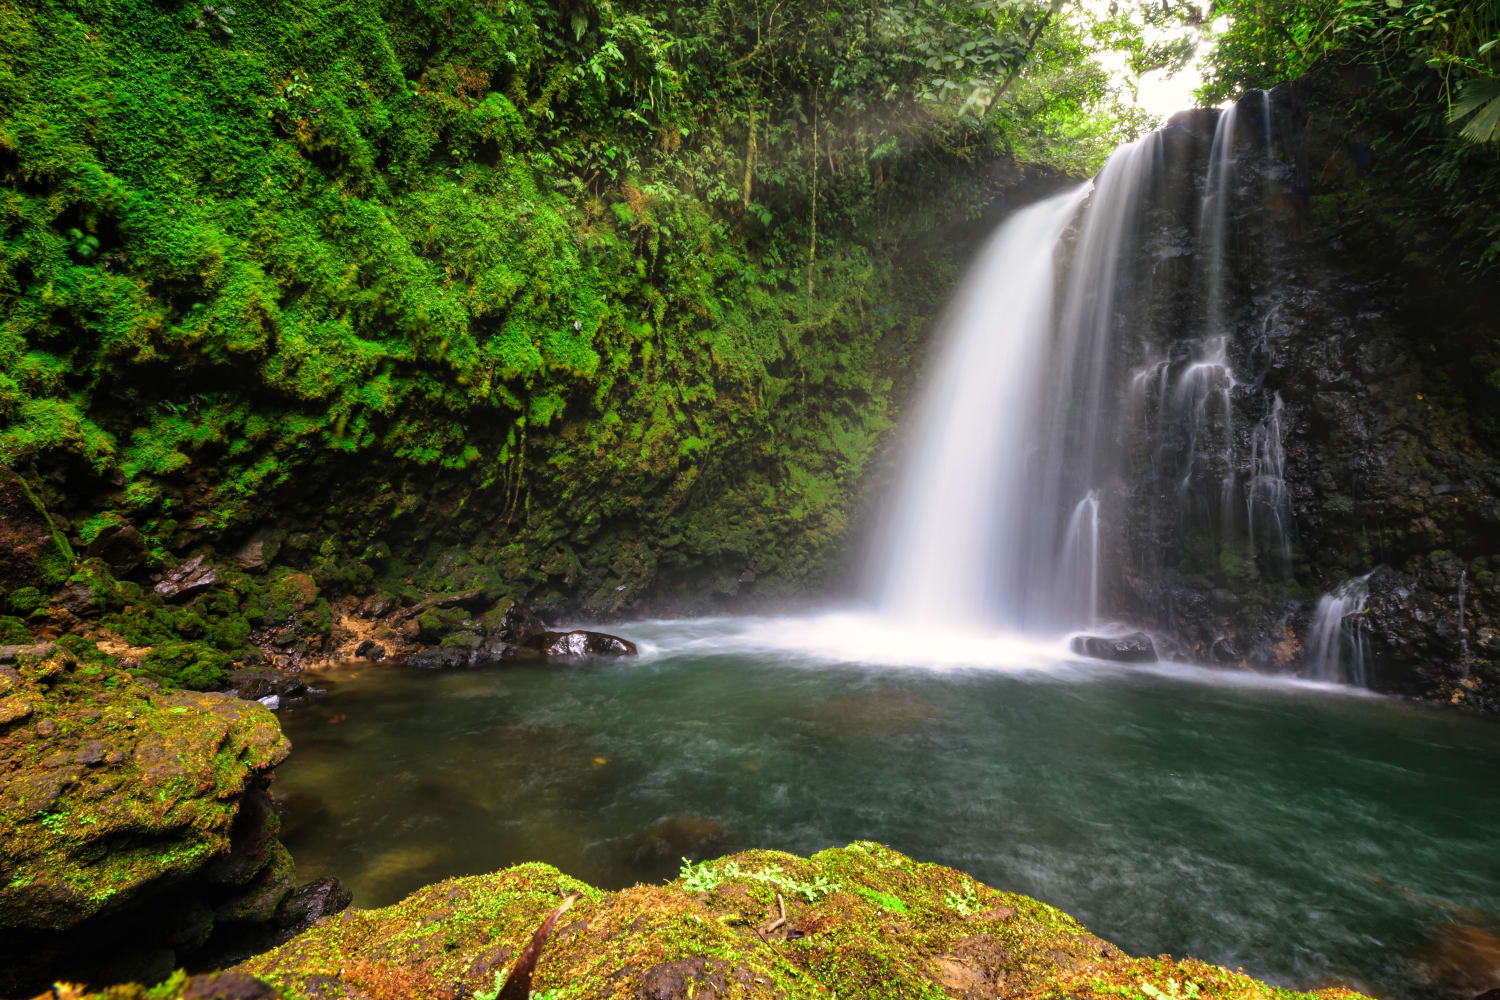 Danta Waterfall near Arenal Volcano, Costa Rica...beyond beautiful